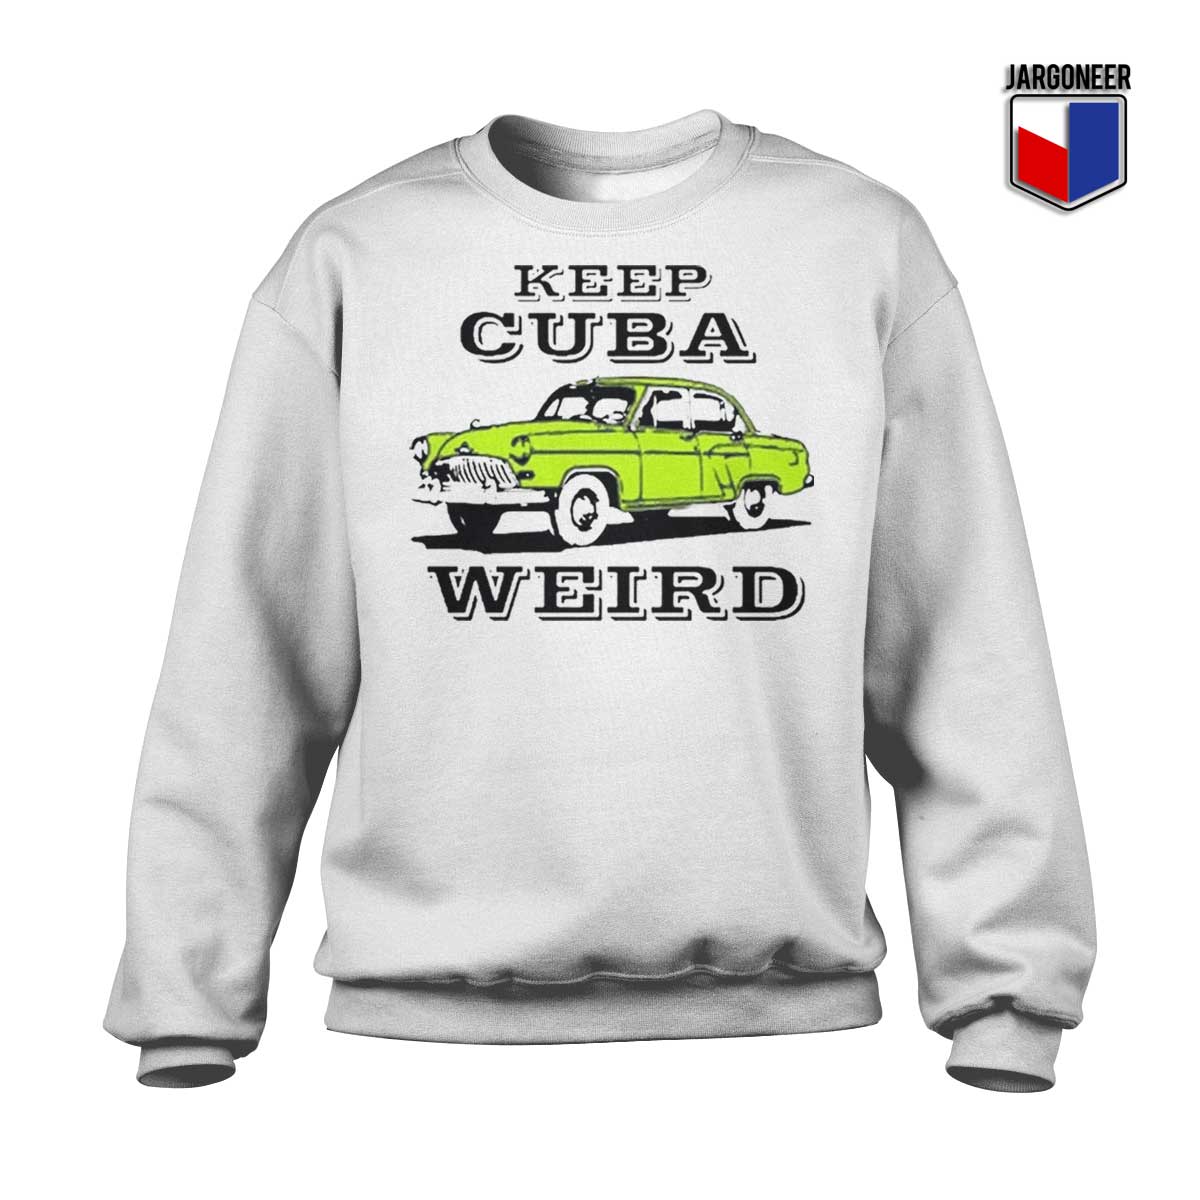 Keep Cuba Weird Car Sweatshirt - Shop Unique Graphic Cool Shirt Designs